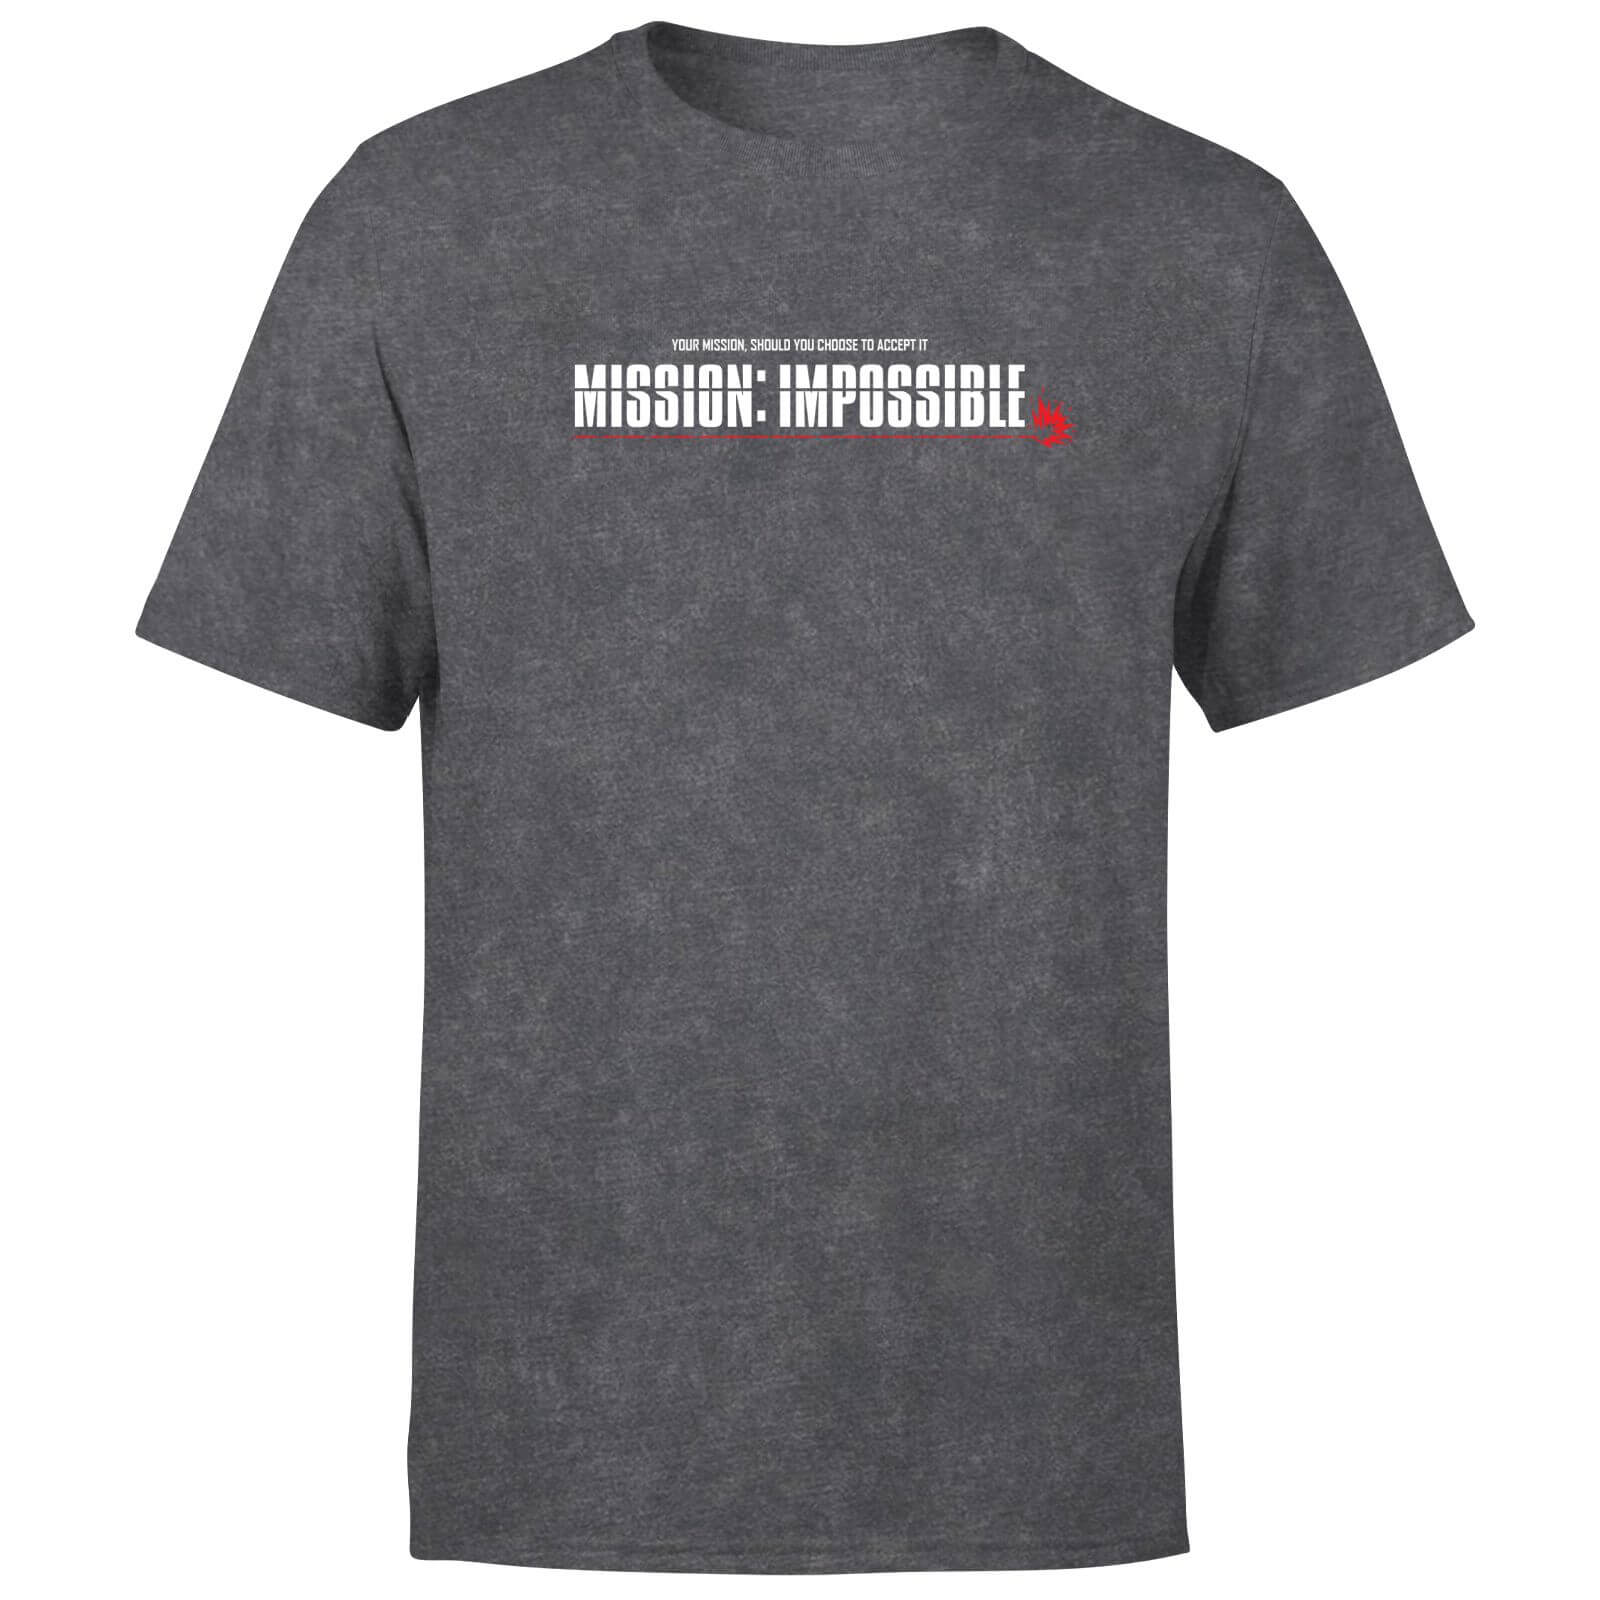 Mission Impossible Unisex T-Shirt - Black Acid Wash - L - Black